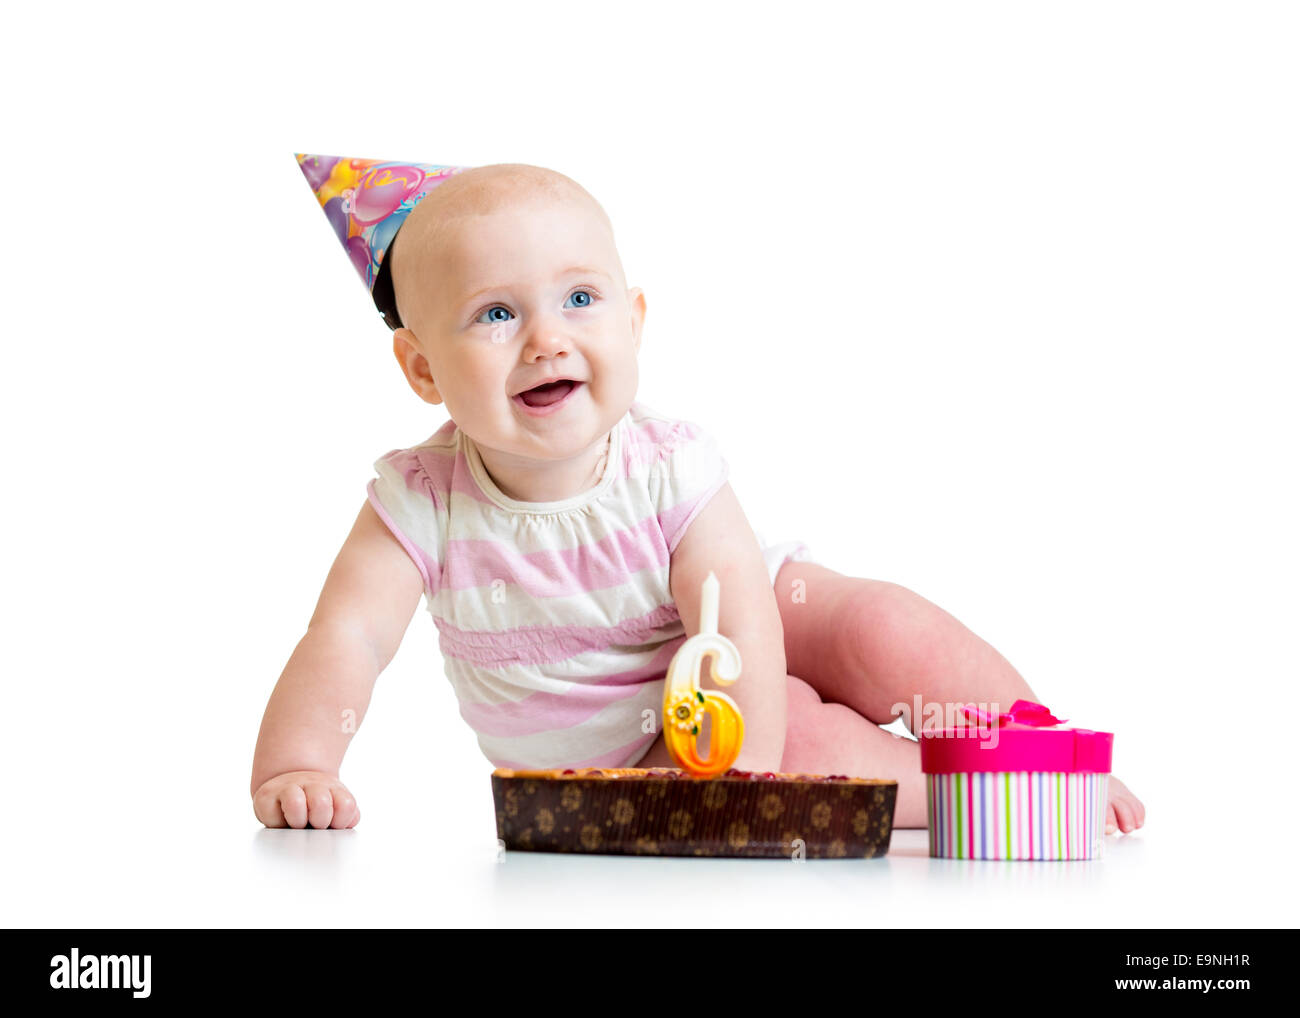 baby girl with birthday cake Stock Photo